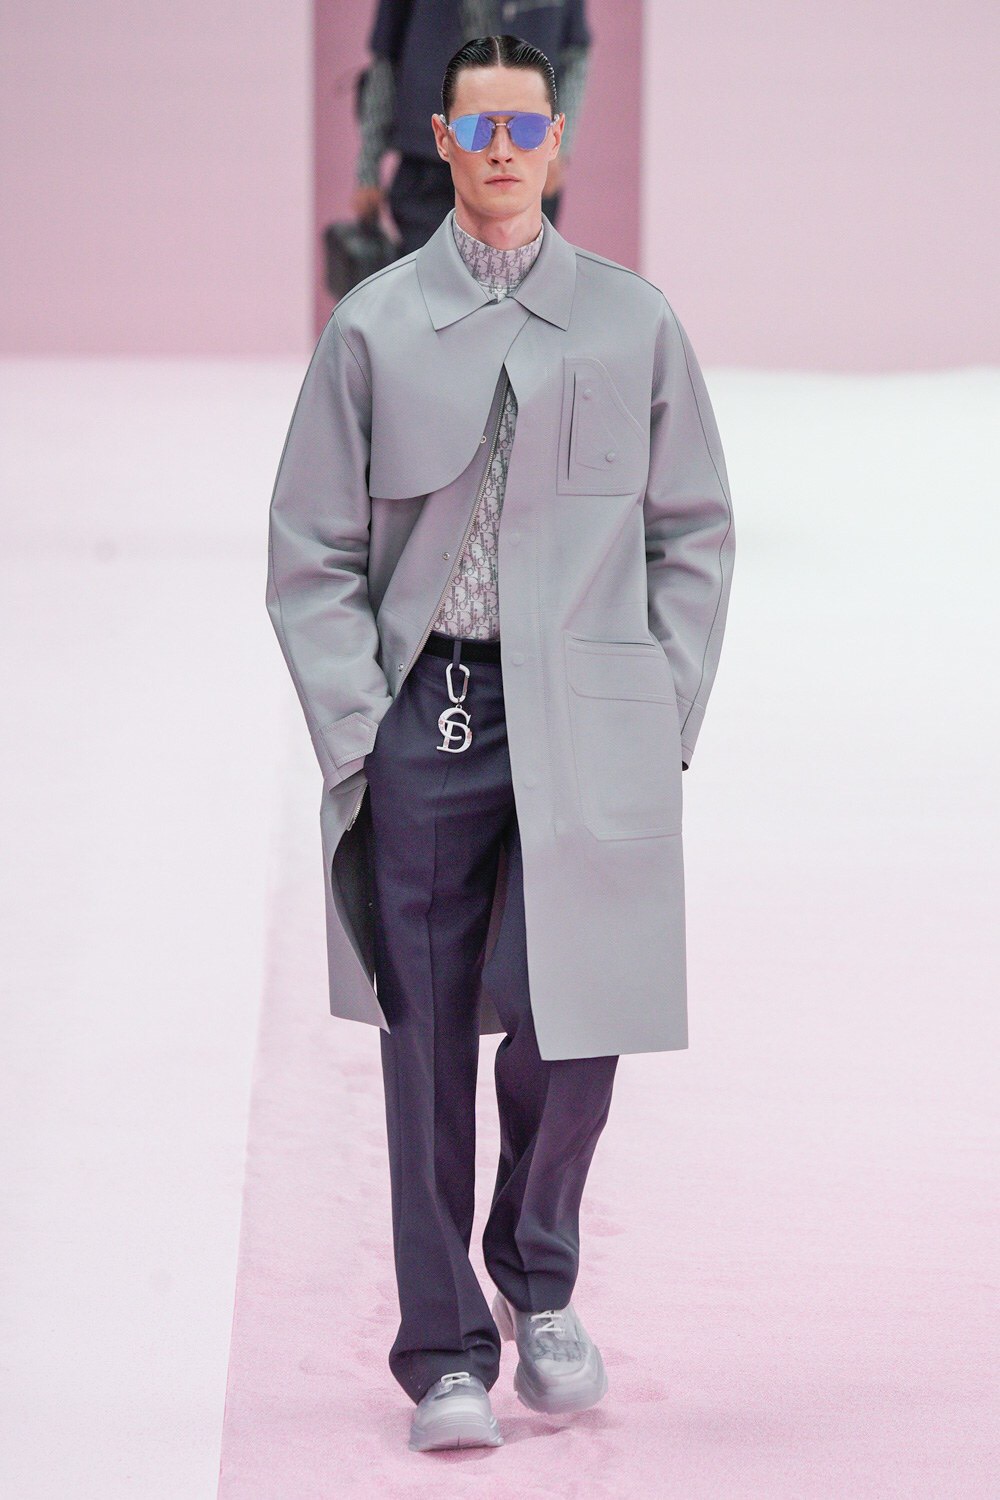 images/cast/20201000020000020=Man SS 2020 COLOUR'S COMPANY fabrics x=Dior Homme